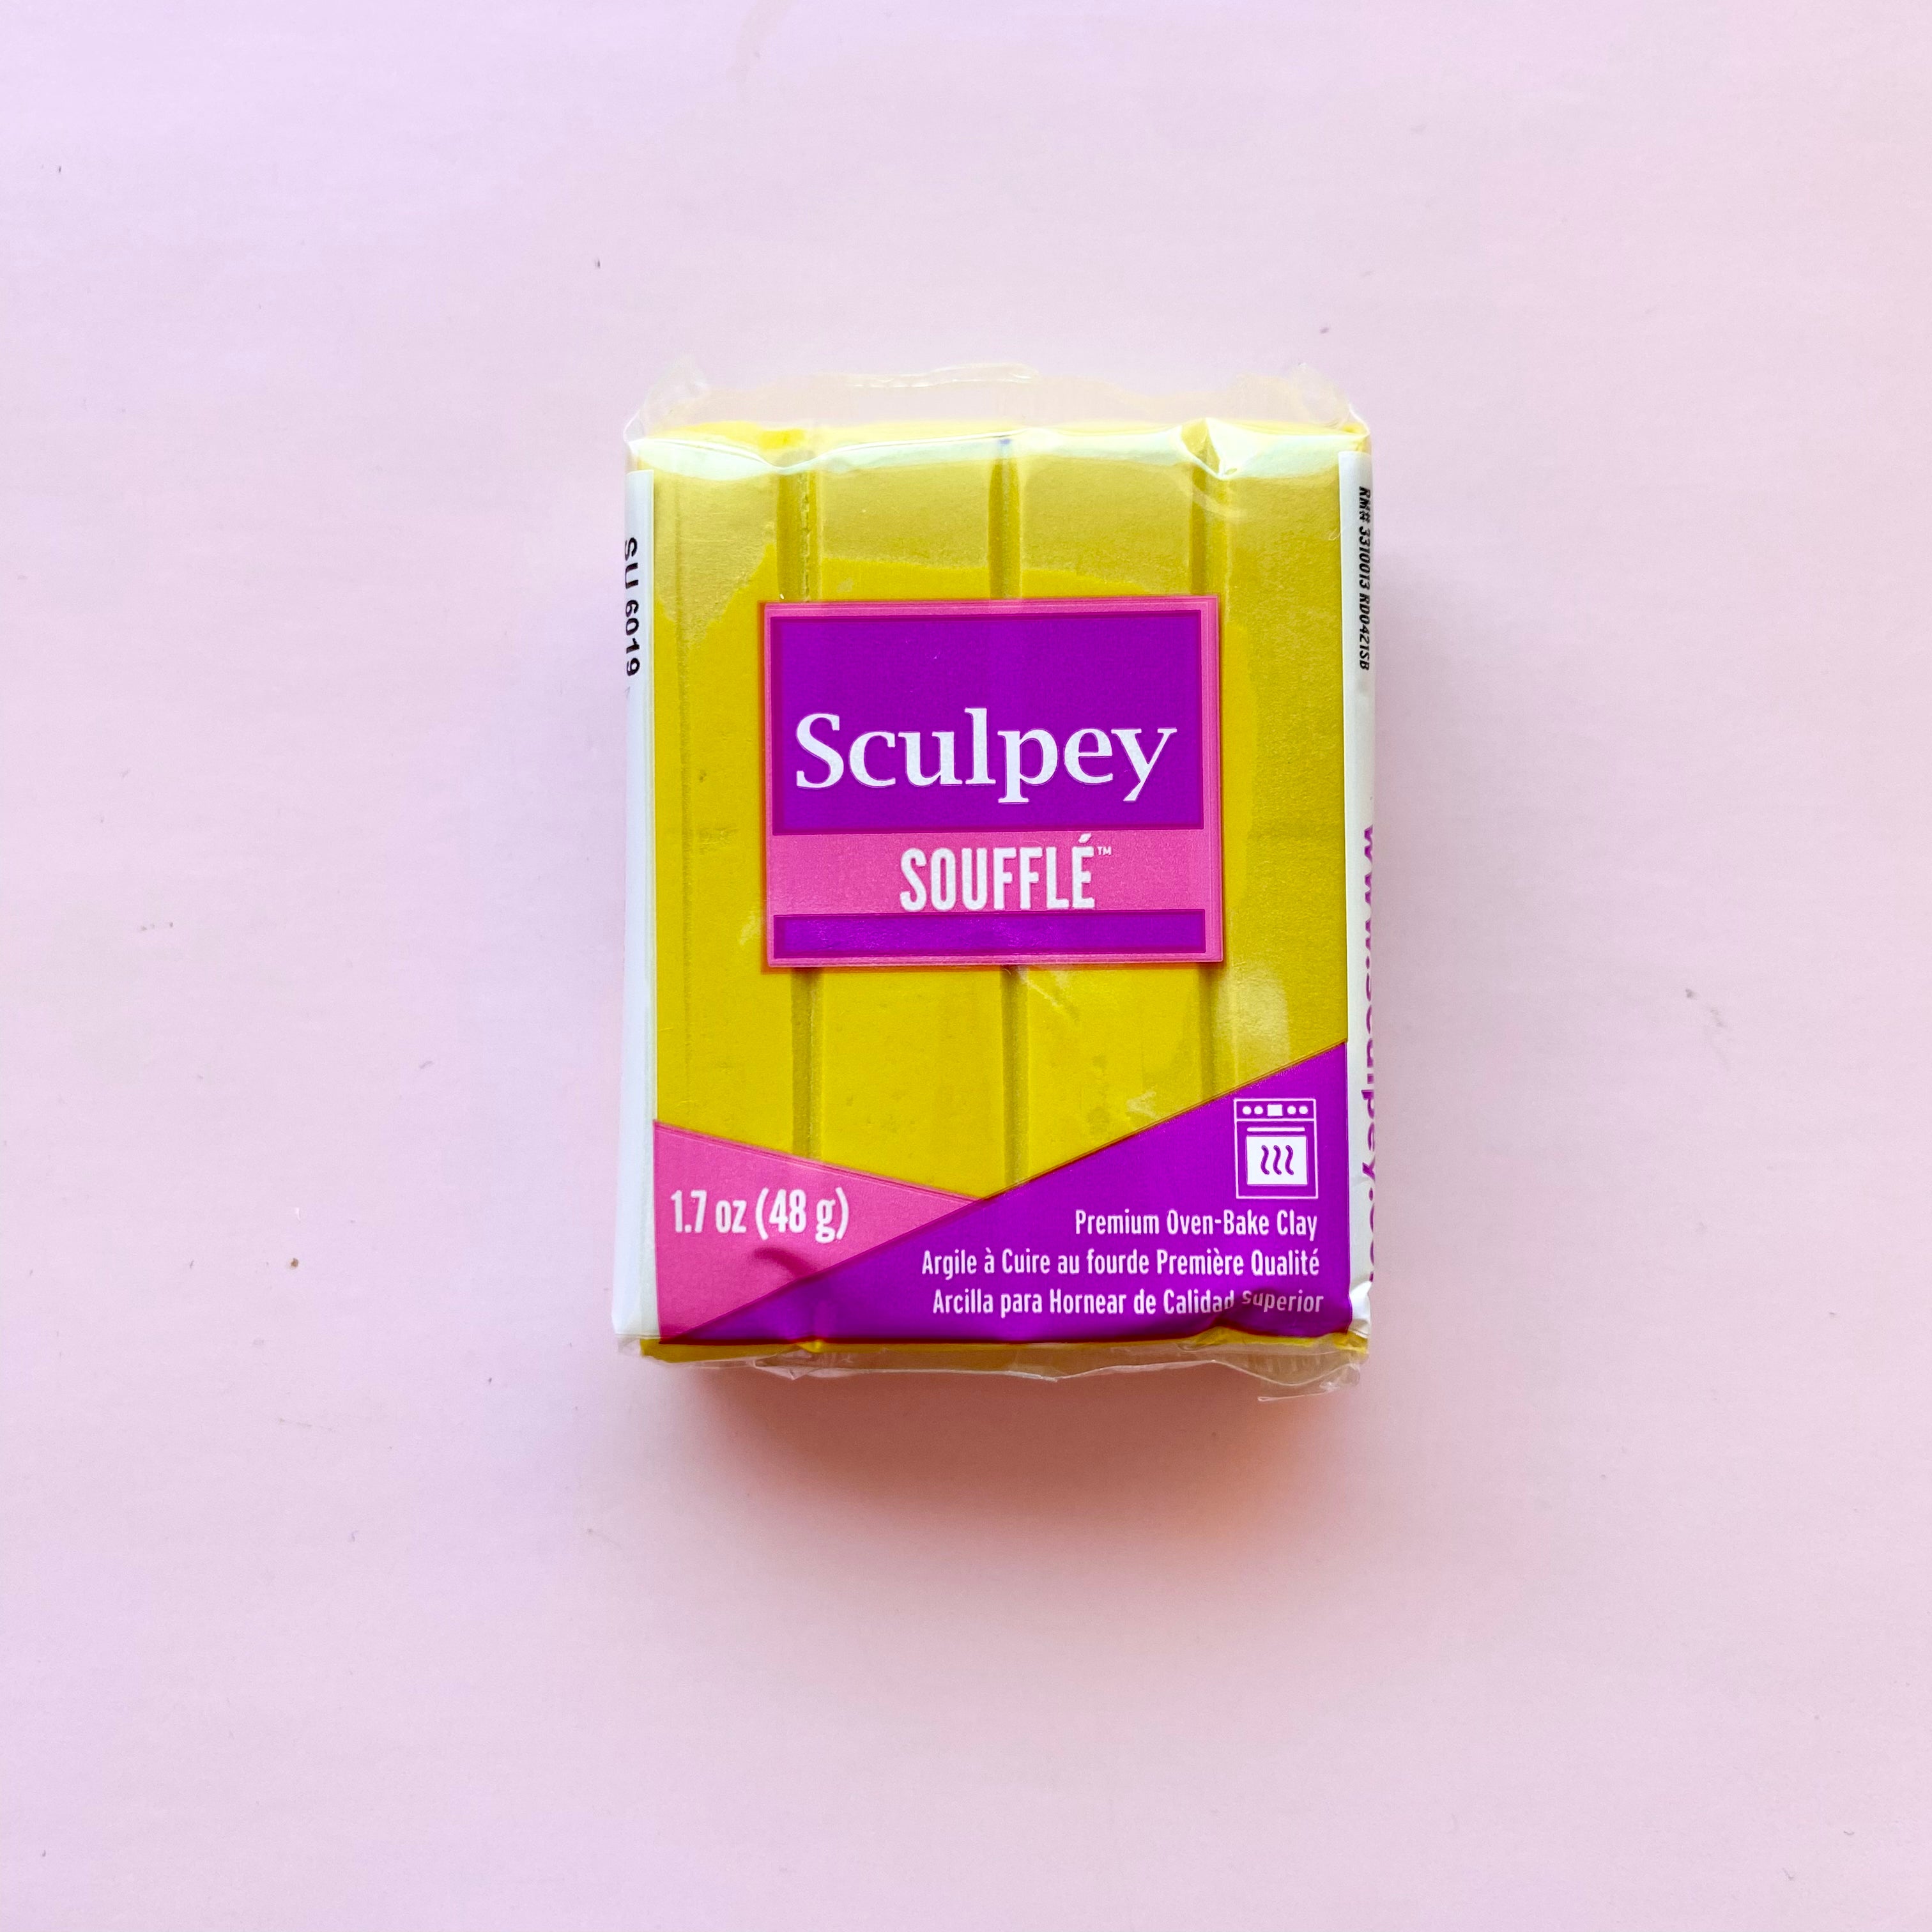 Sculpey Souffle Sedona